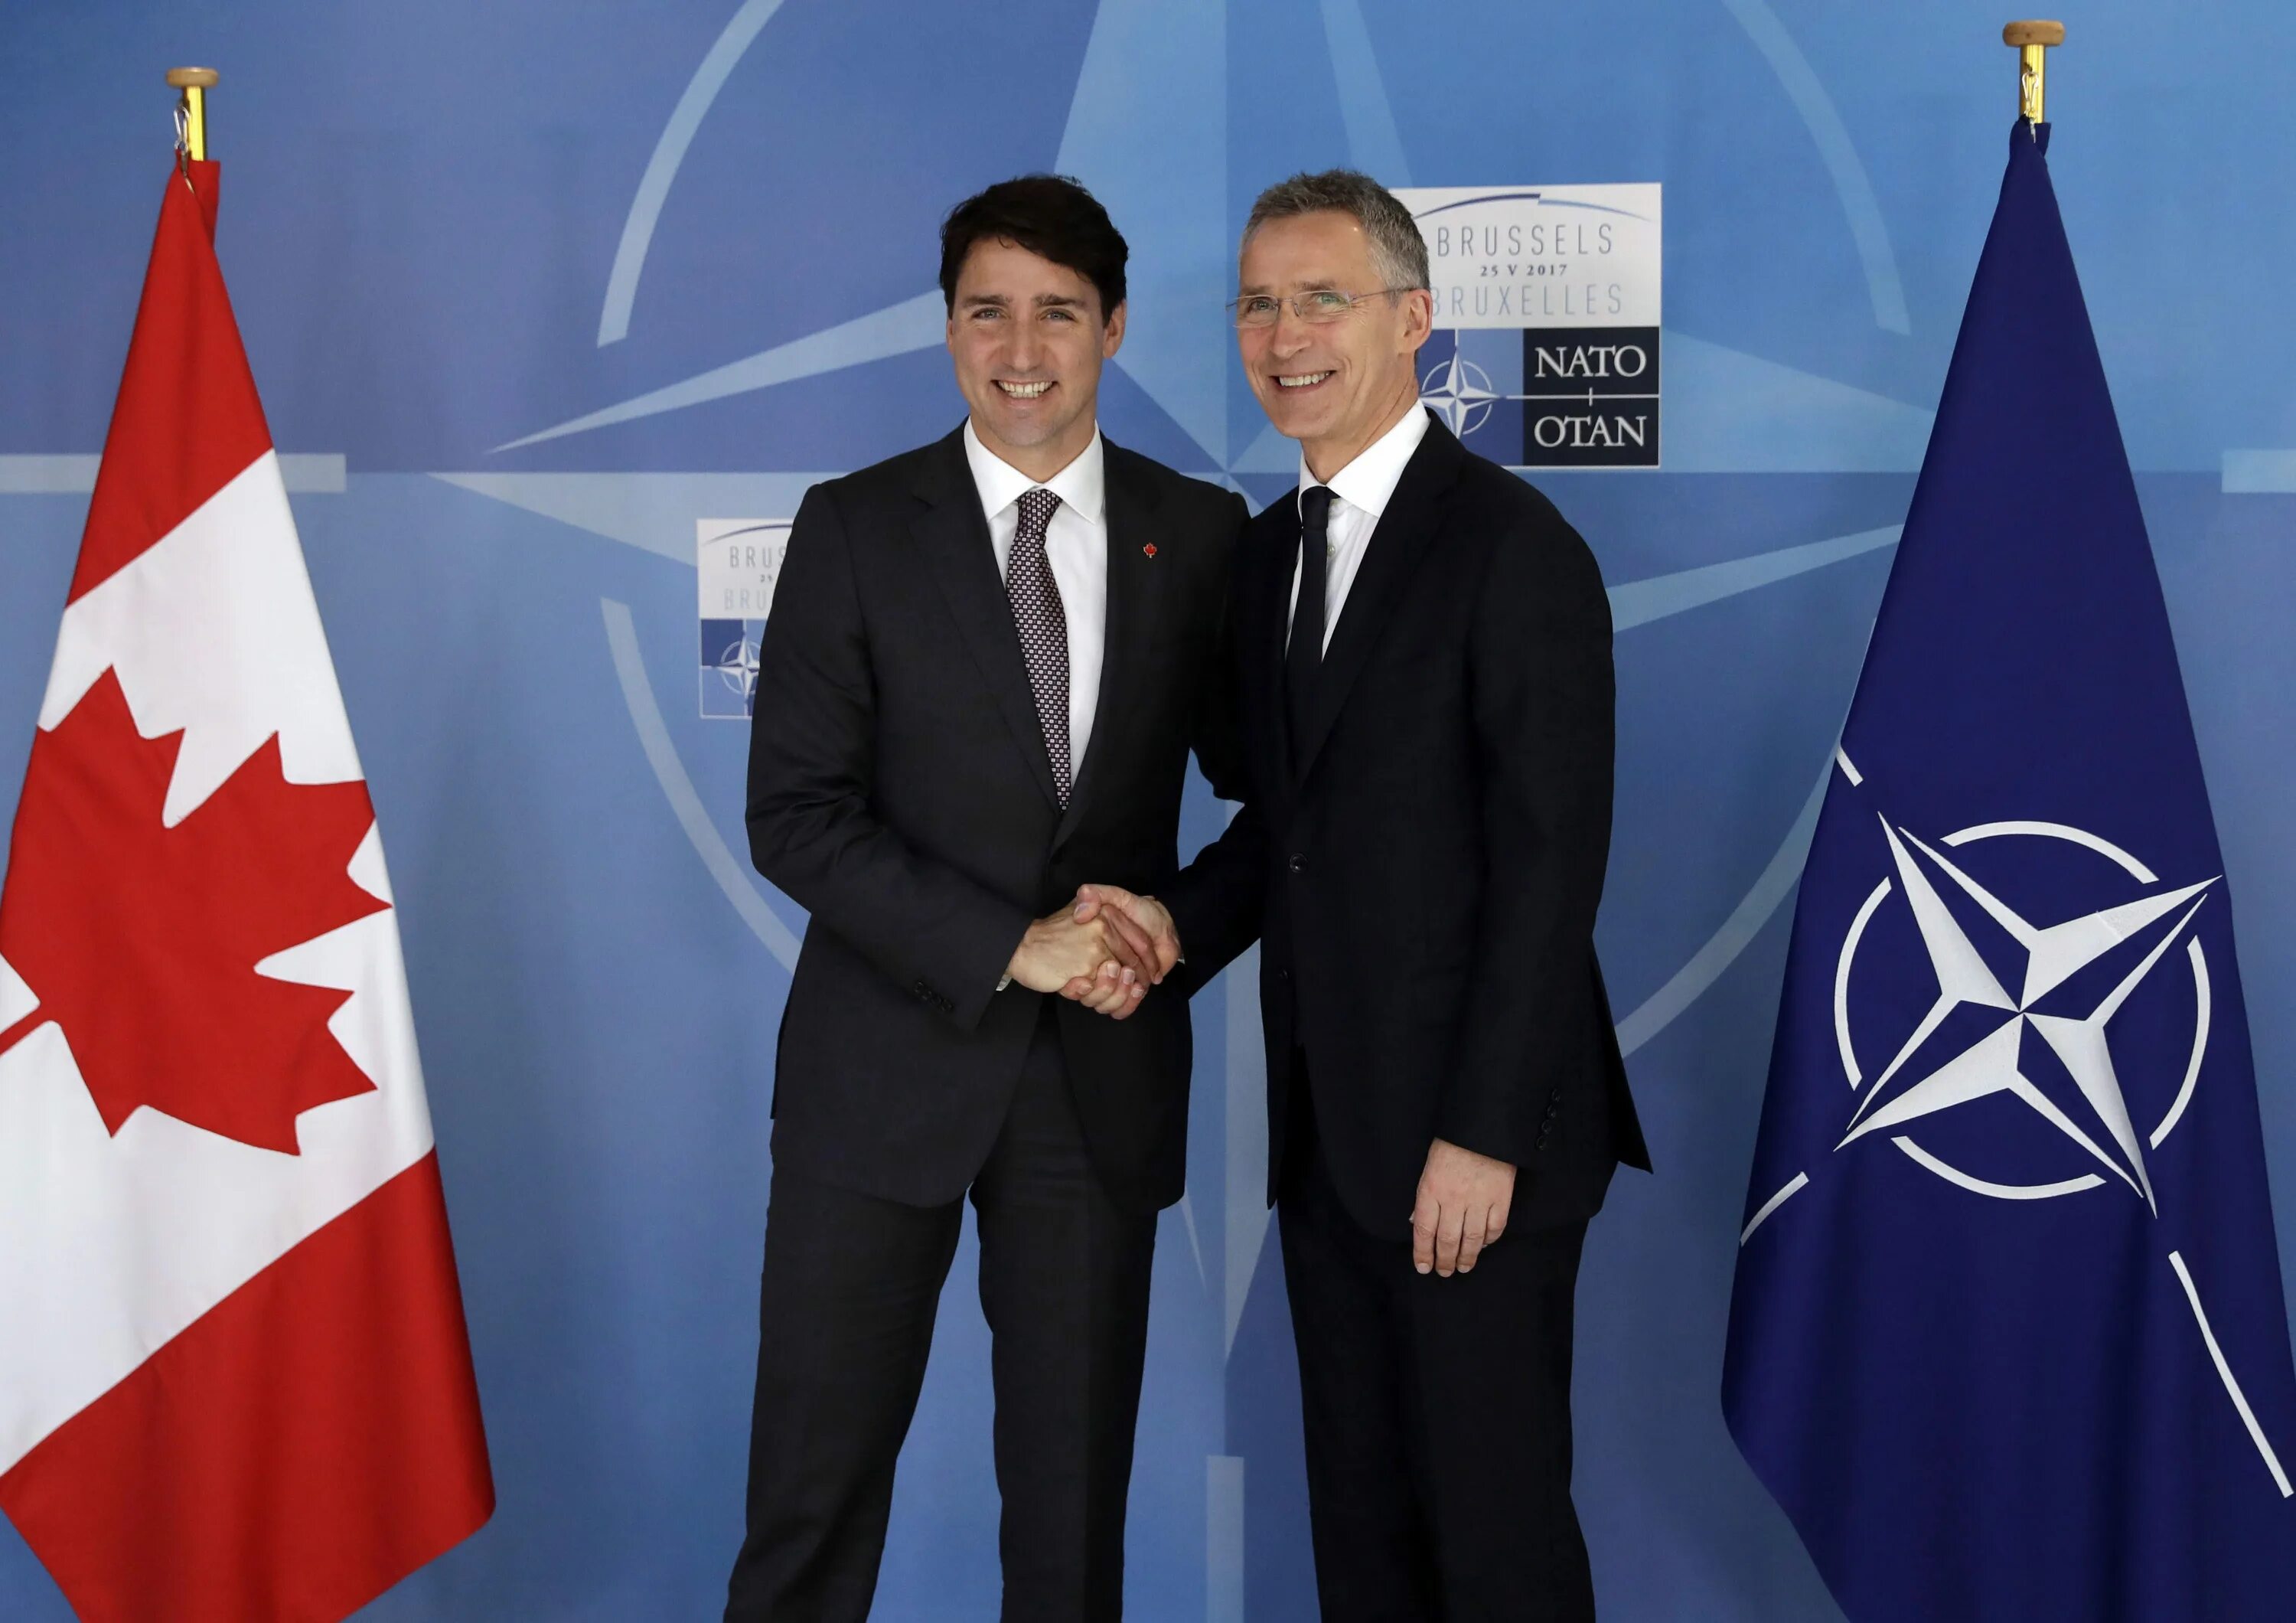 Нов россии и нато. Саммит НАТО 1999. Канада НАТО. Канада в НАТО или нет. Флаг Канады и НАТО.